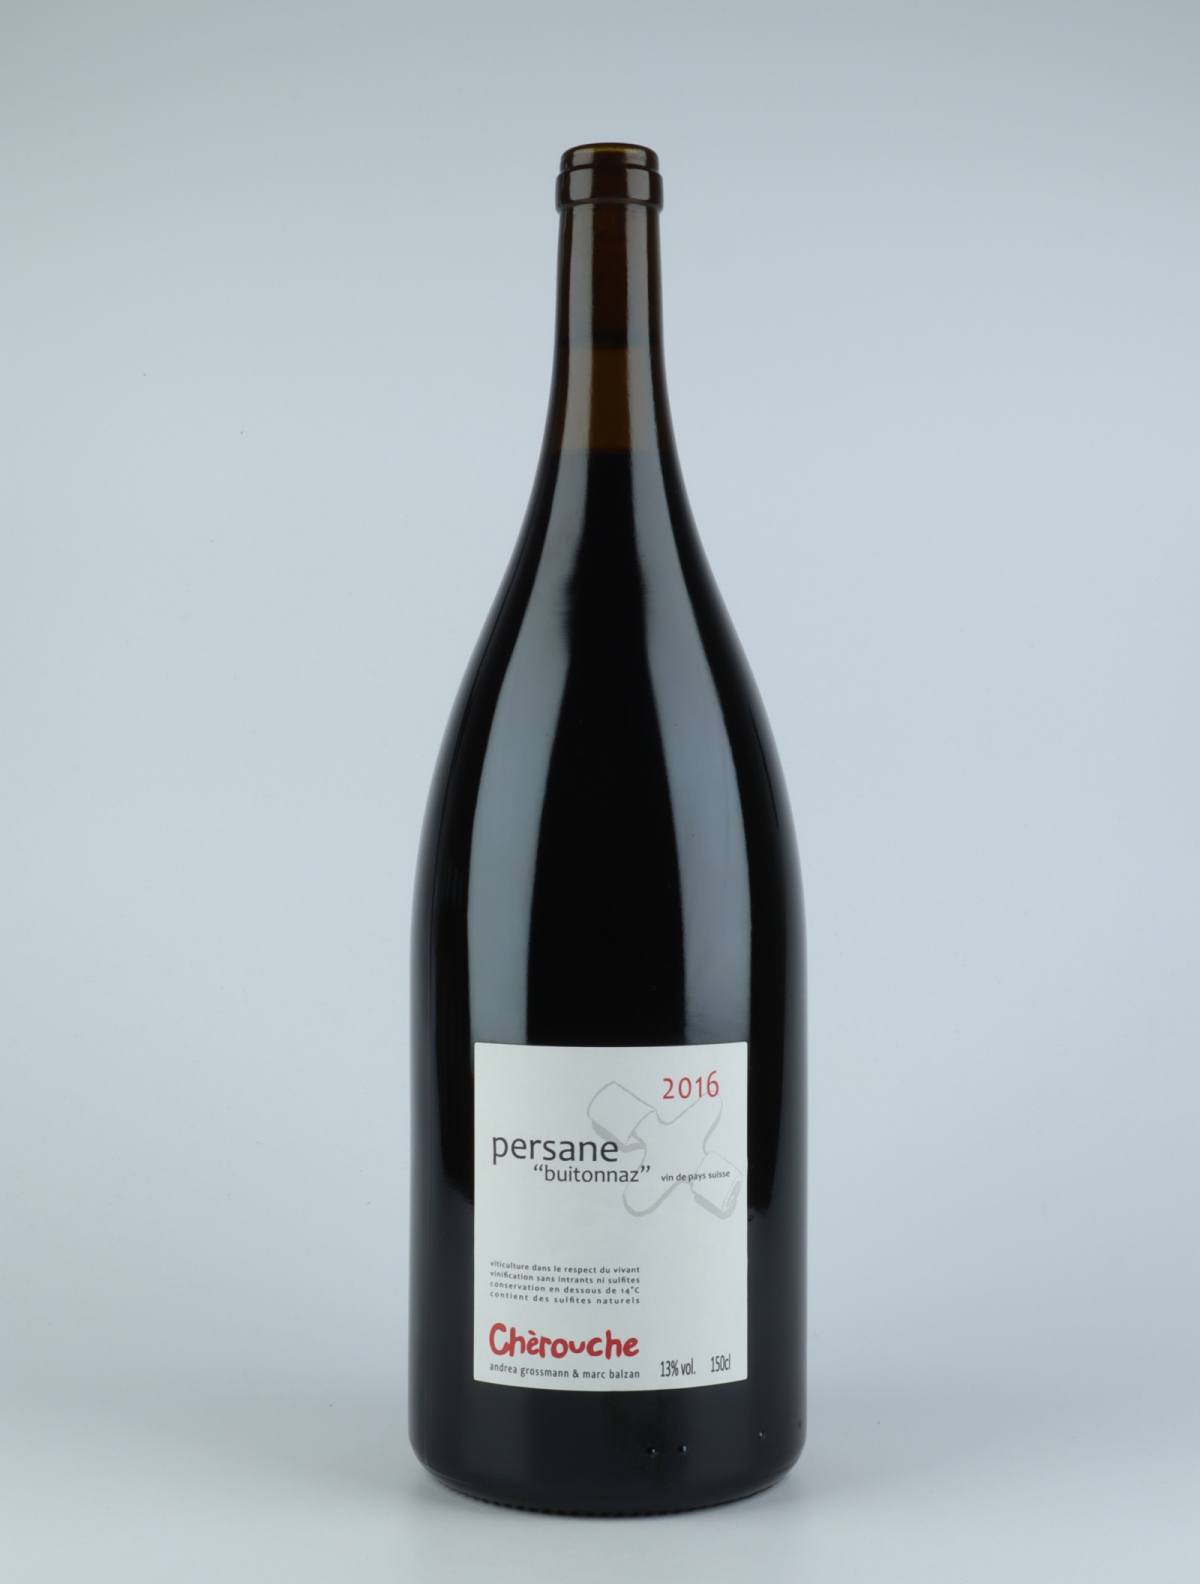 En flaske 2016 Persane Syrah Rødvin fra Chèrouche, Valais i Schweiz